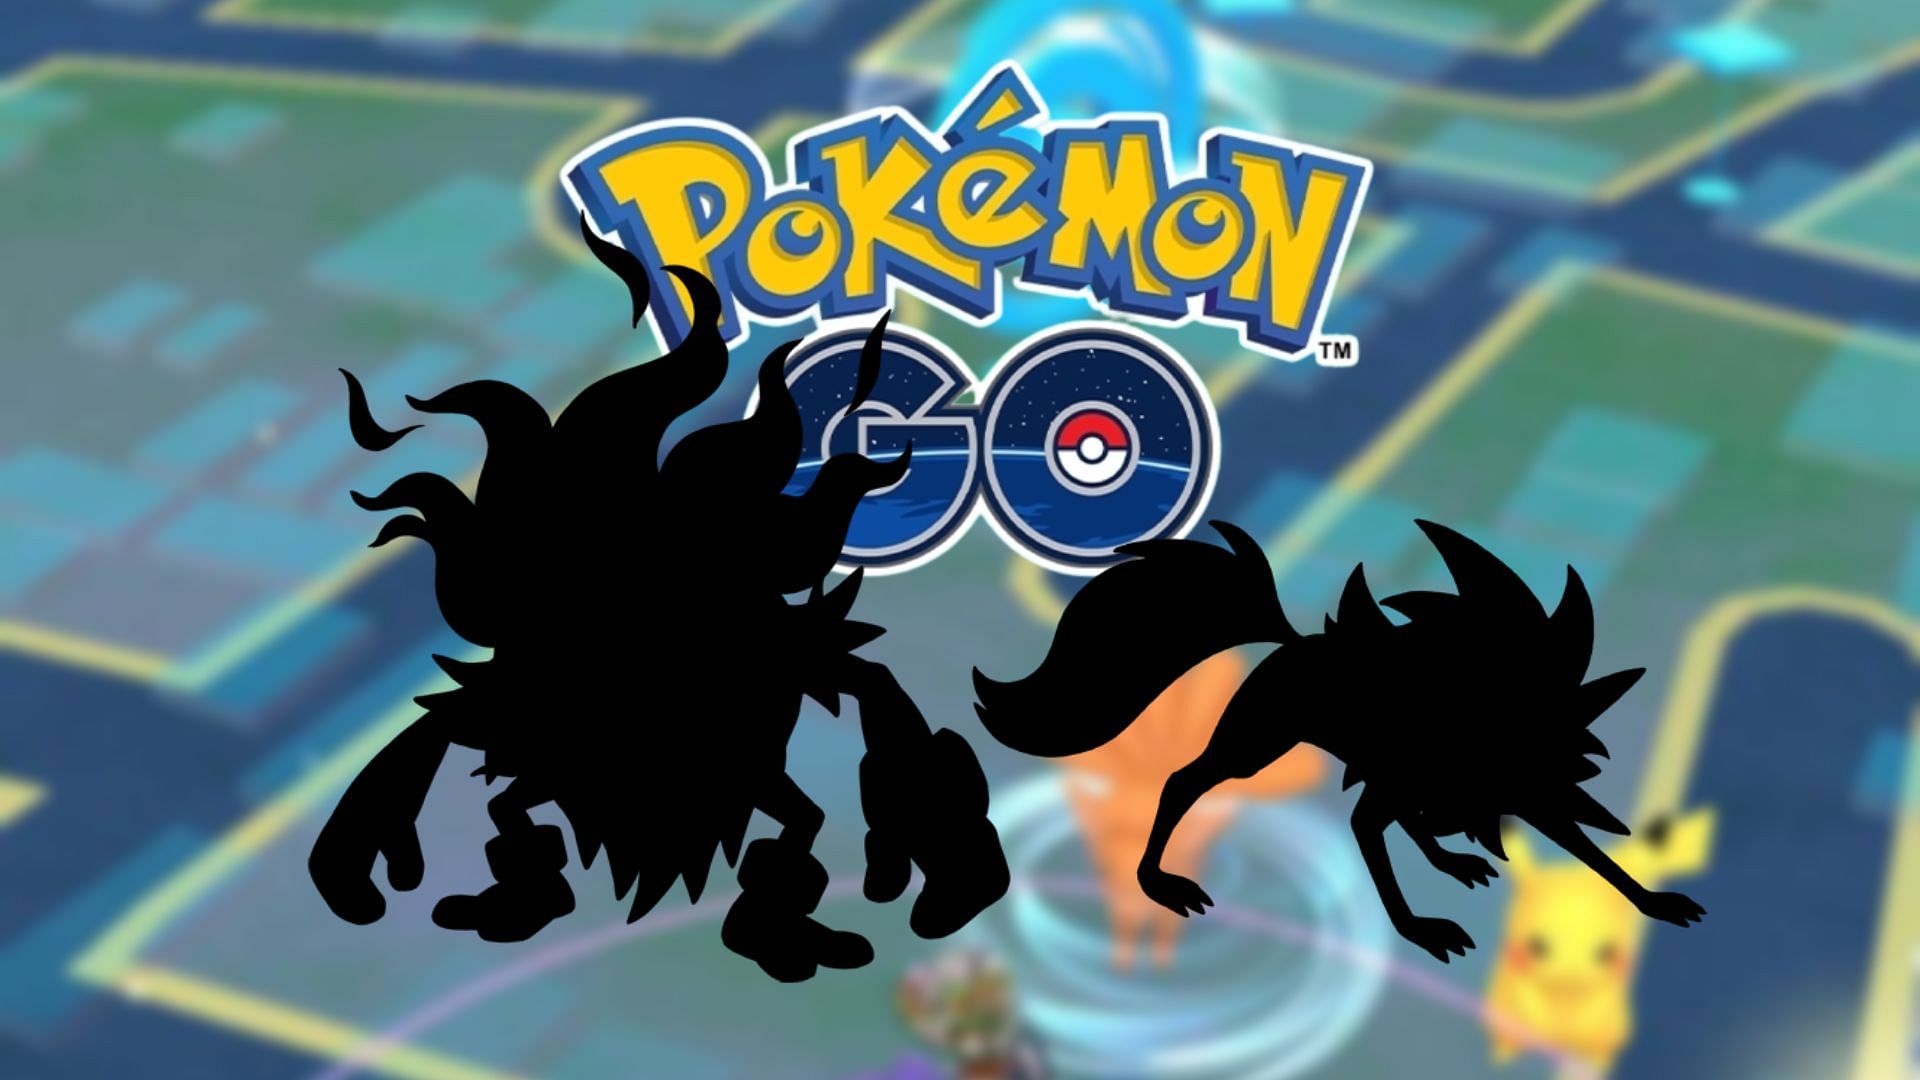 Pokémon GO Tour Sinnoh: Global! event will be introducing new shinys